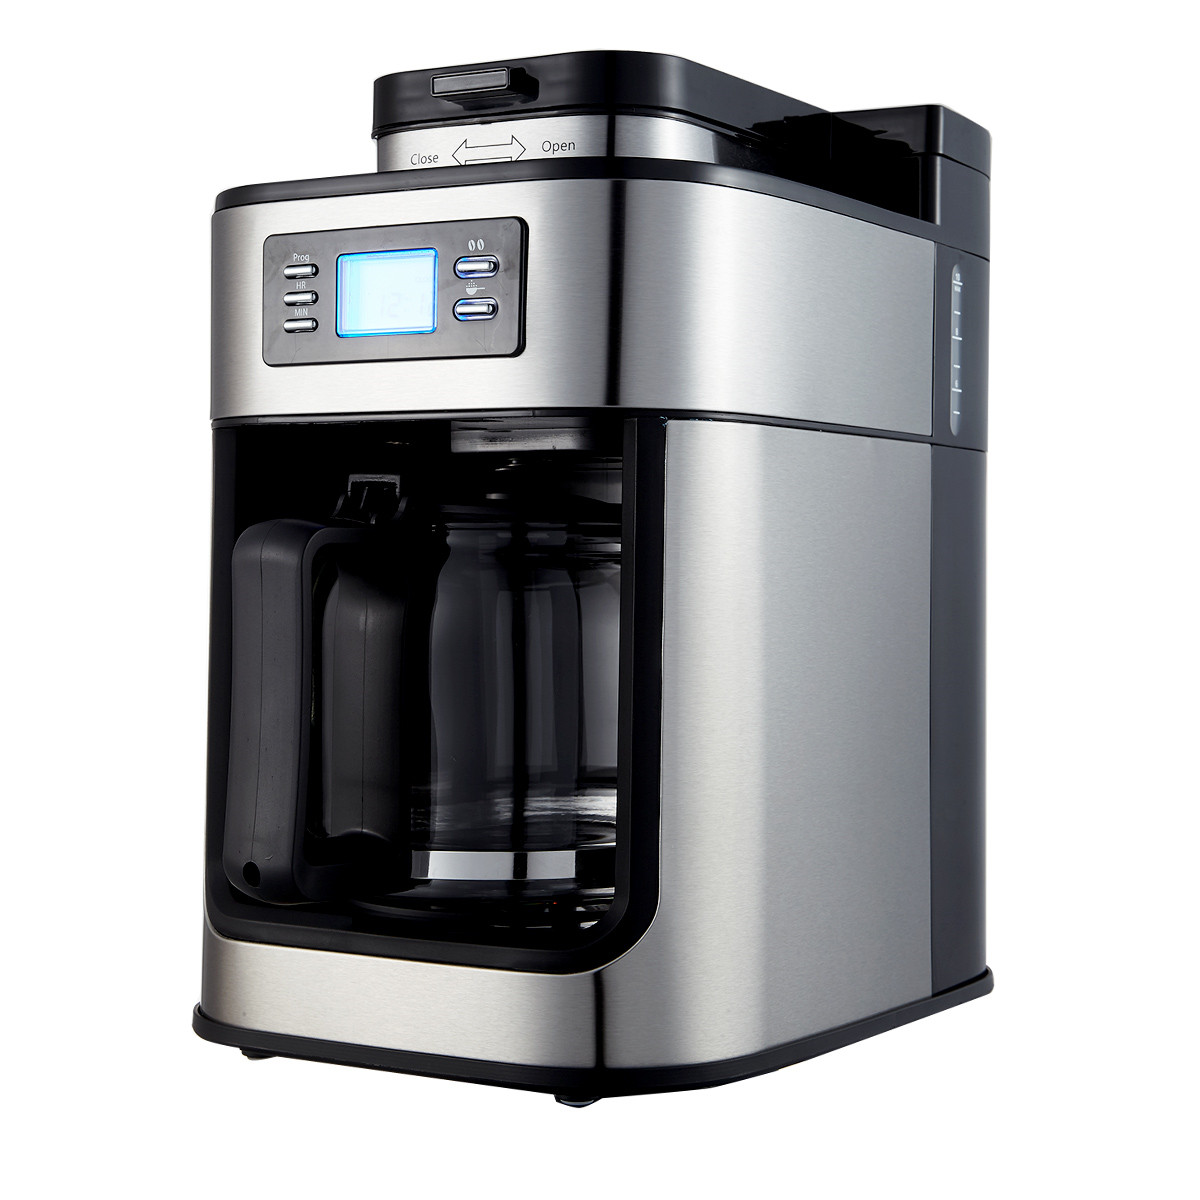 

1000W 110V Auto Drip Coffee Machine American Espresso Drink Maker With Grinder